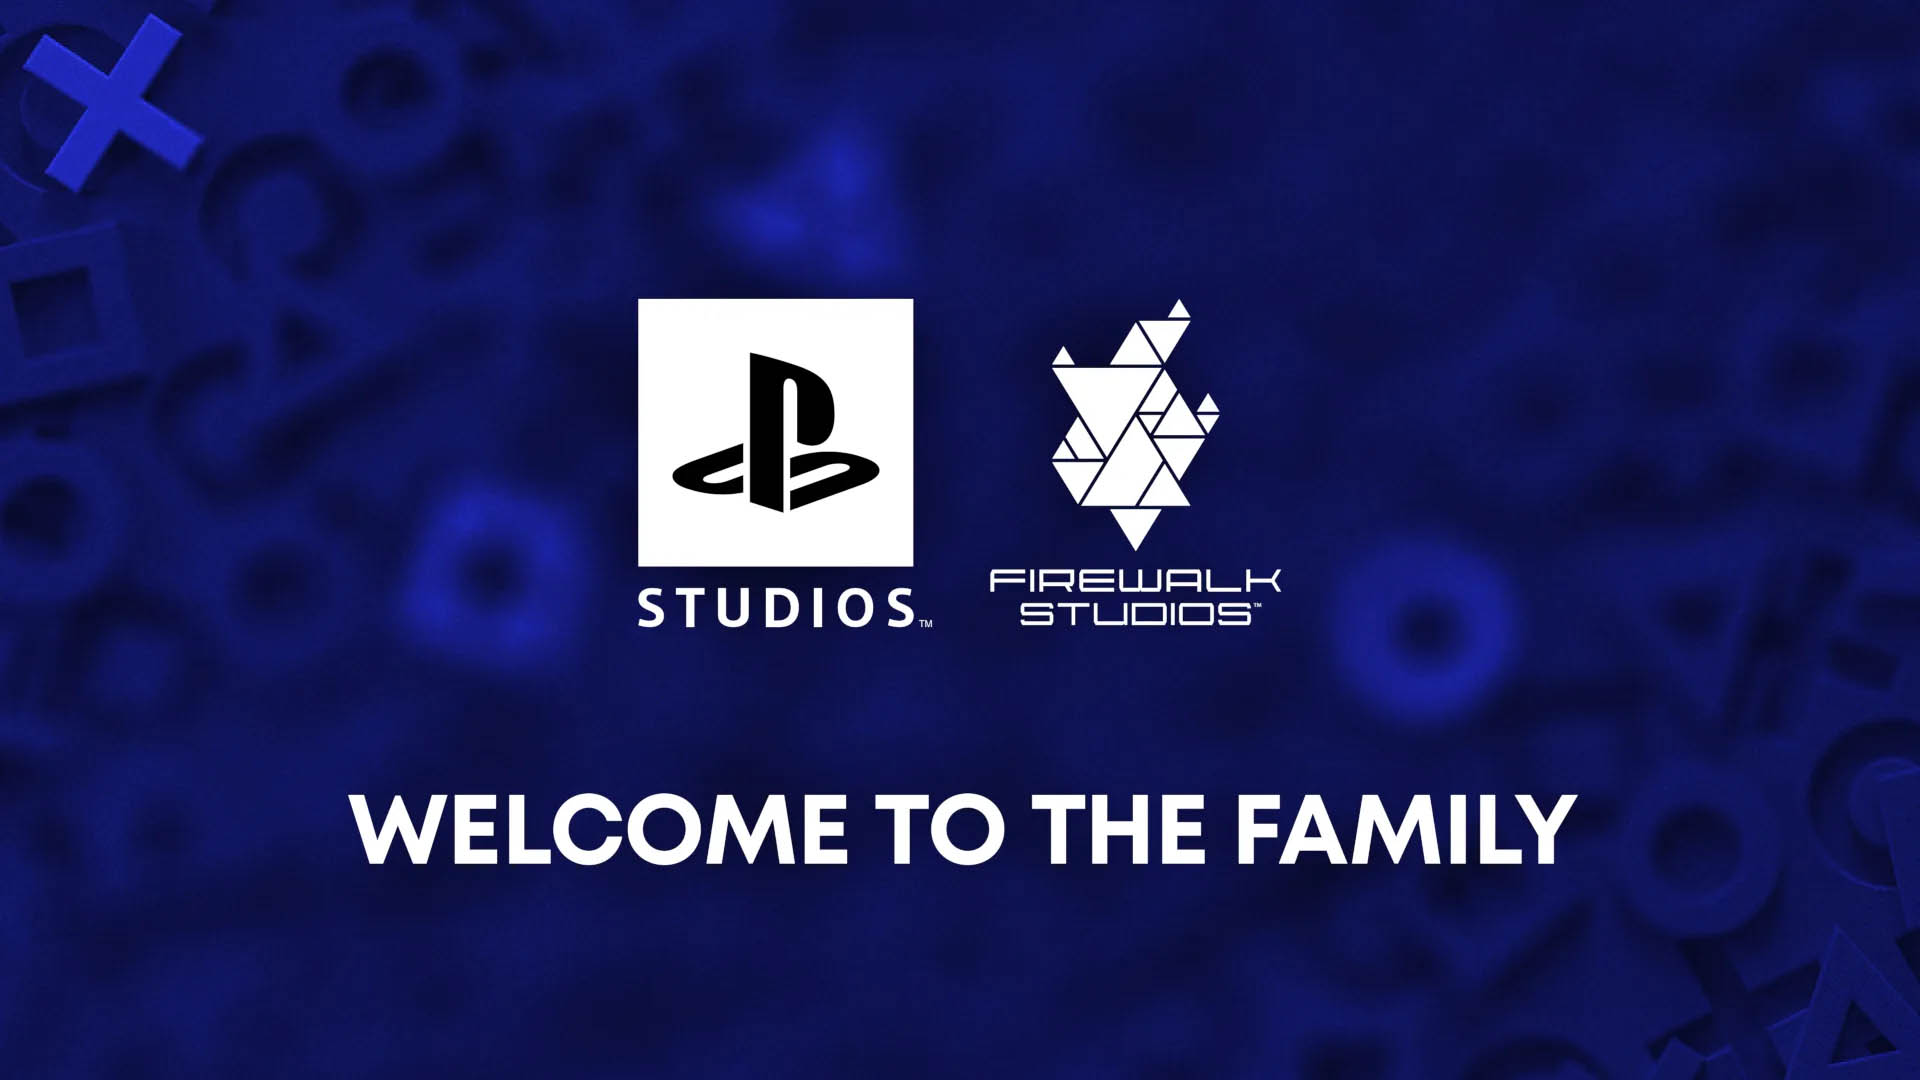 Sony has acquired Firewalk Studios